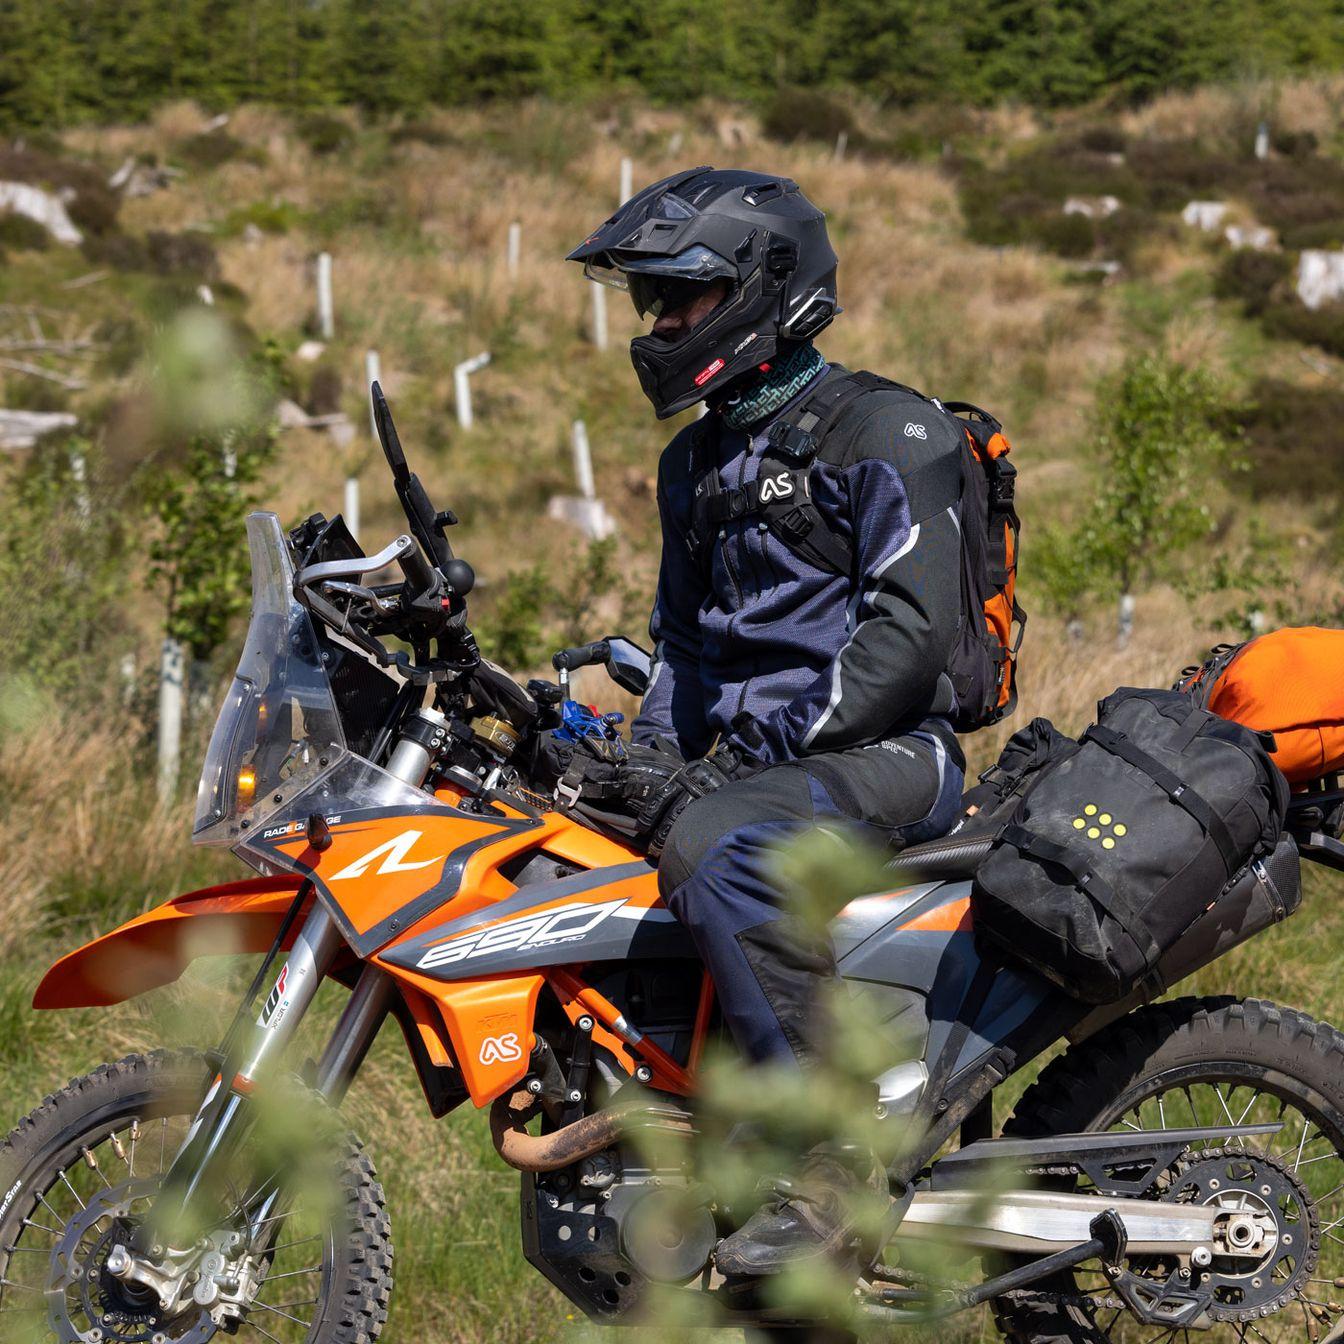 Mongolia Trail Pant adventure spec motorcycle trousers blue motorbike gear